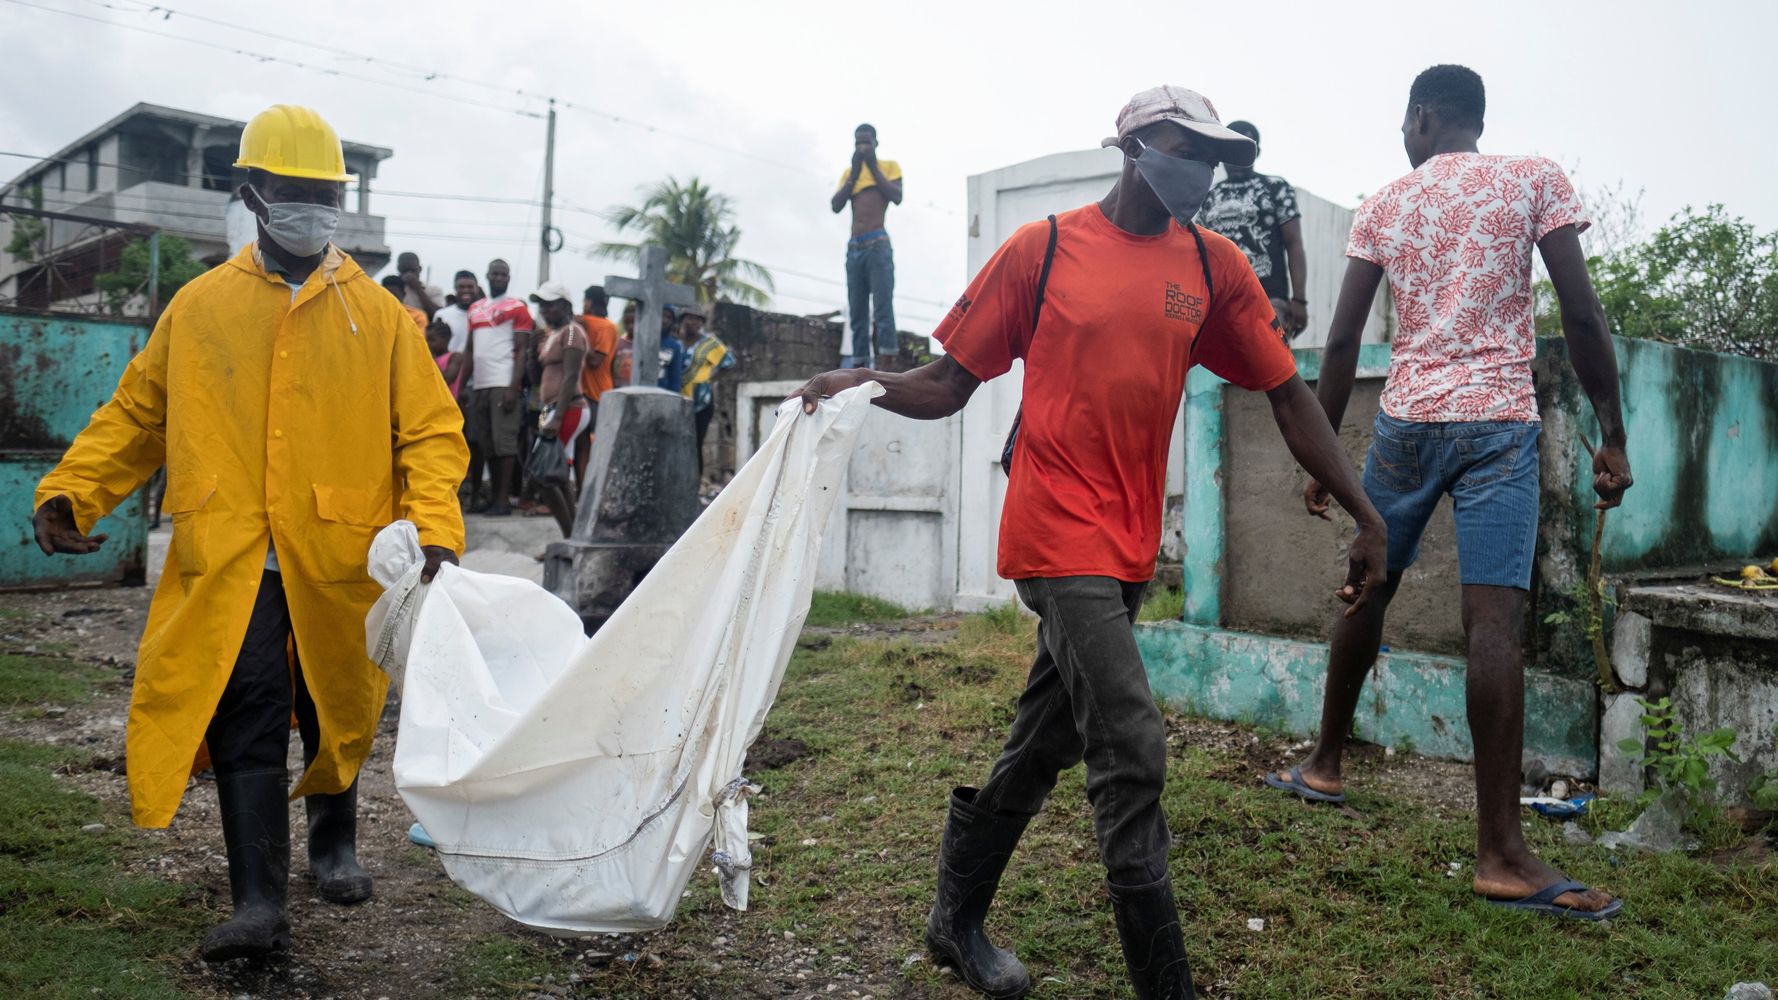 Haiti Earthquake Death Toll Tops 2,100 As Survivors Struggle To Access Aid, Shelter